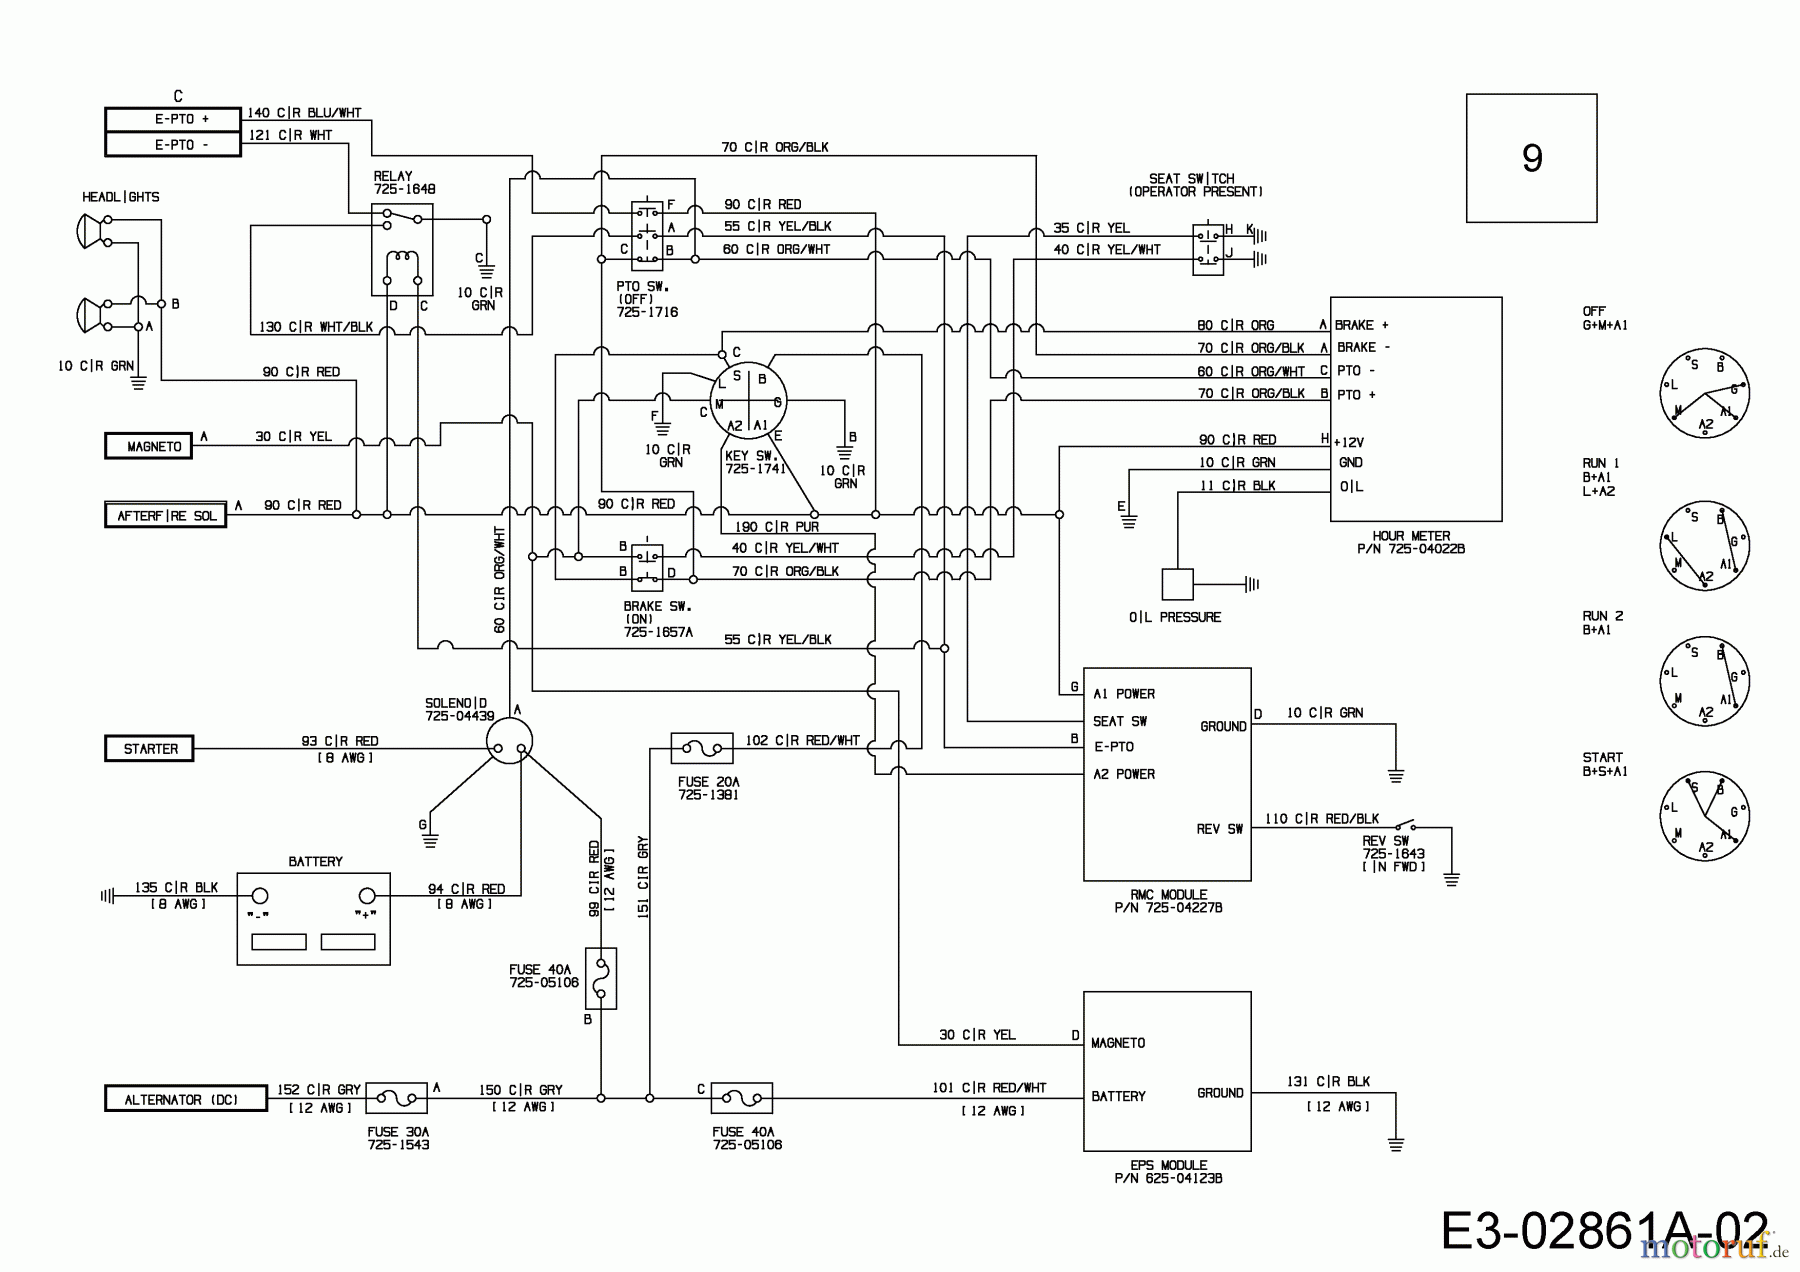 Cub cadet 1050 wiring diagram